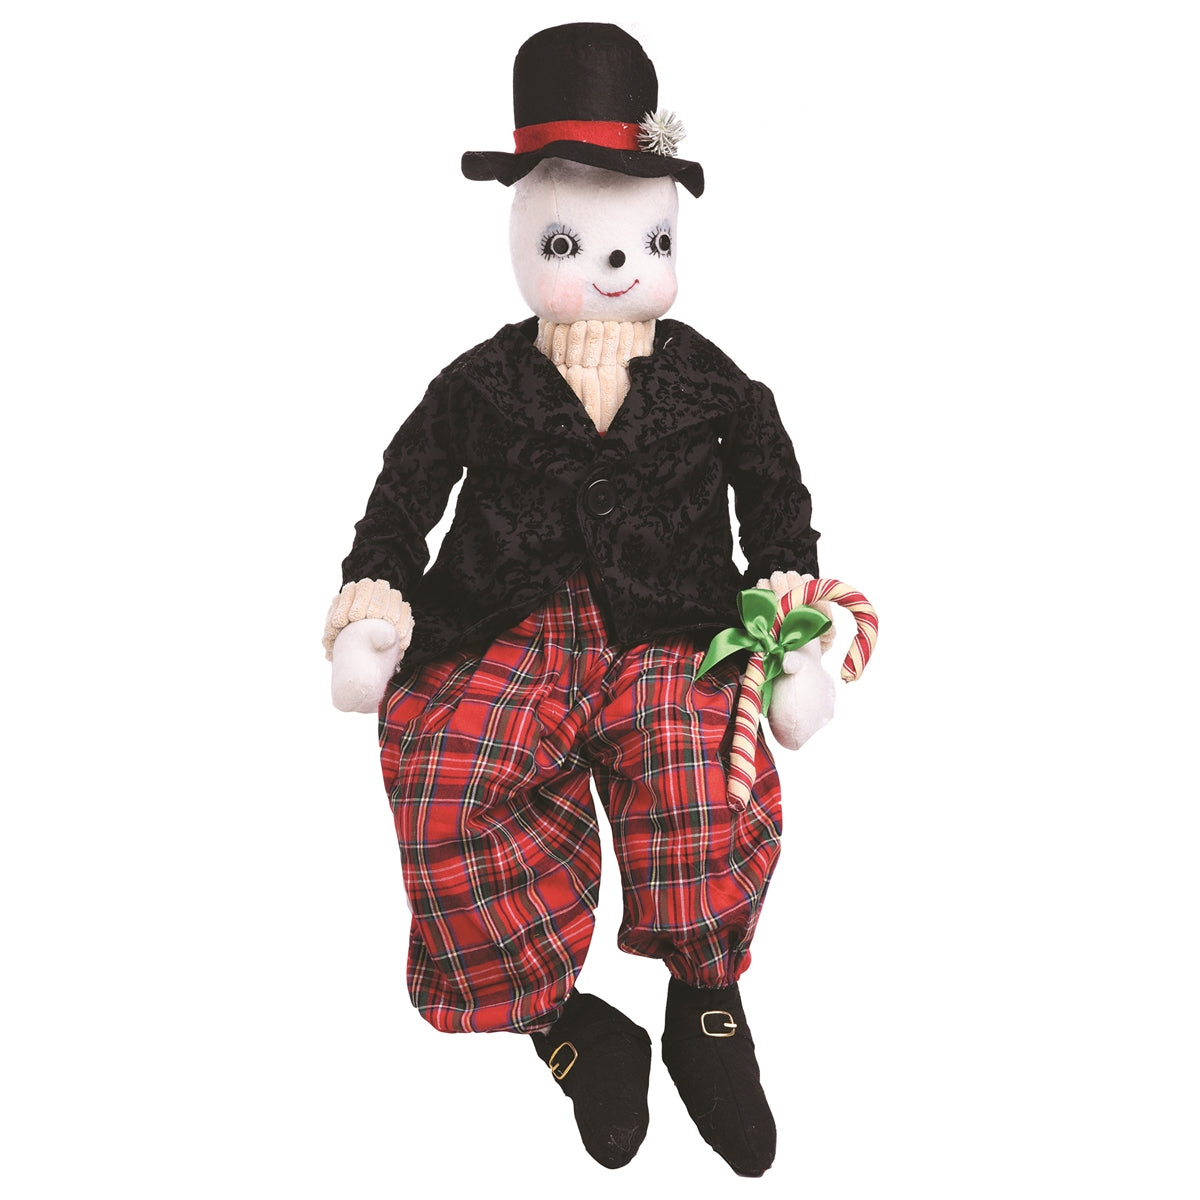 Joe Spencer Byron Snowman in Top Hat - Cloth Snowmen Dolls